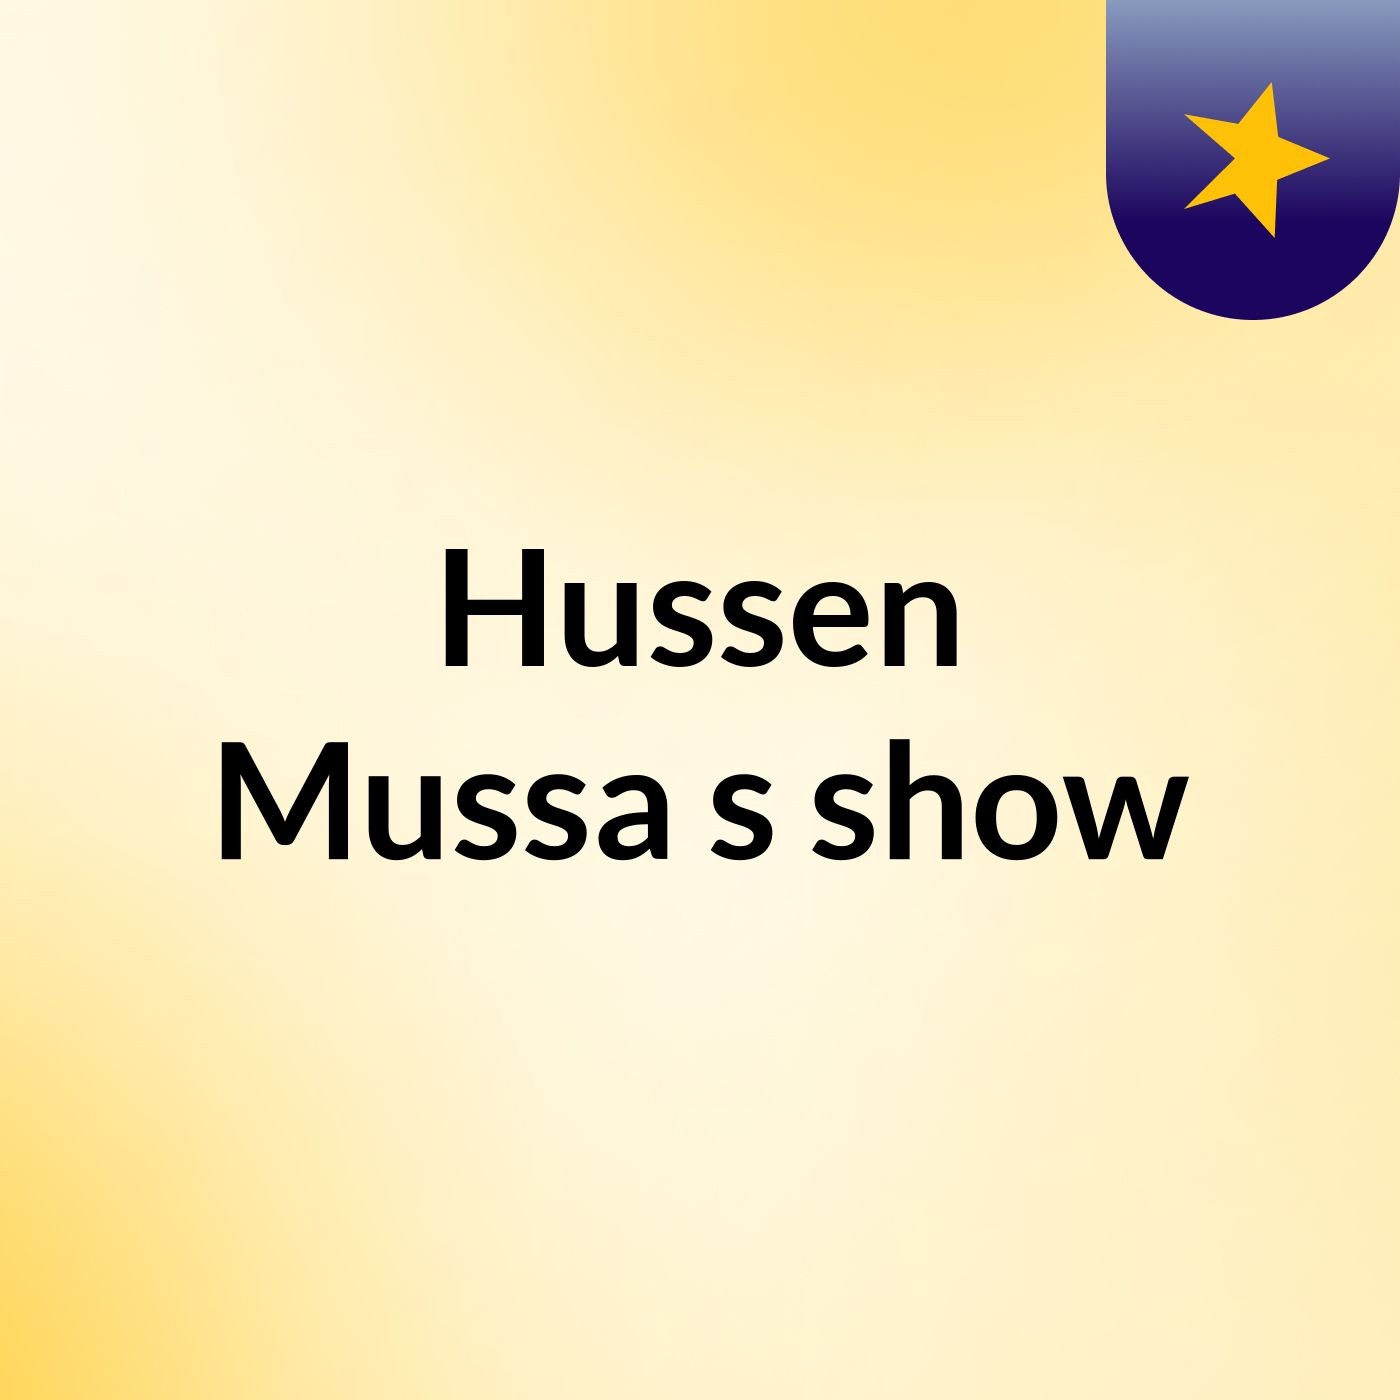 Hussen Mussa's show